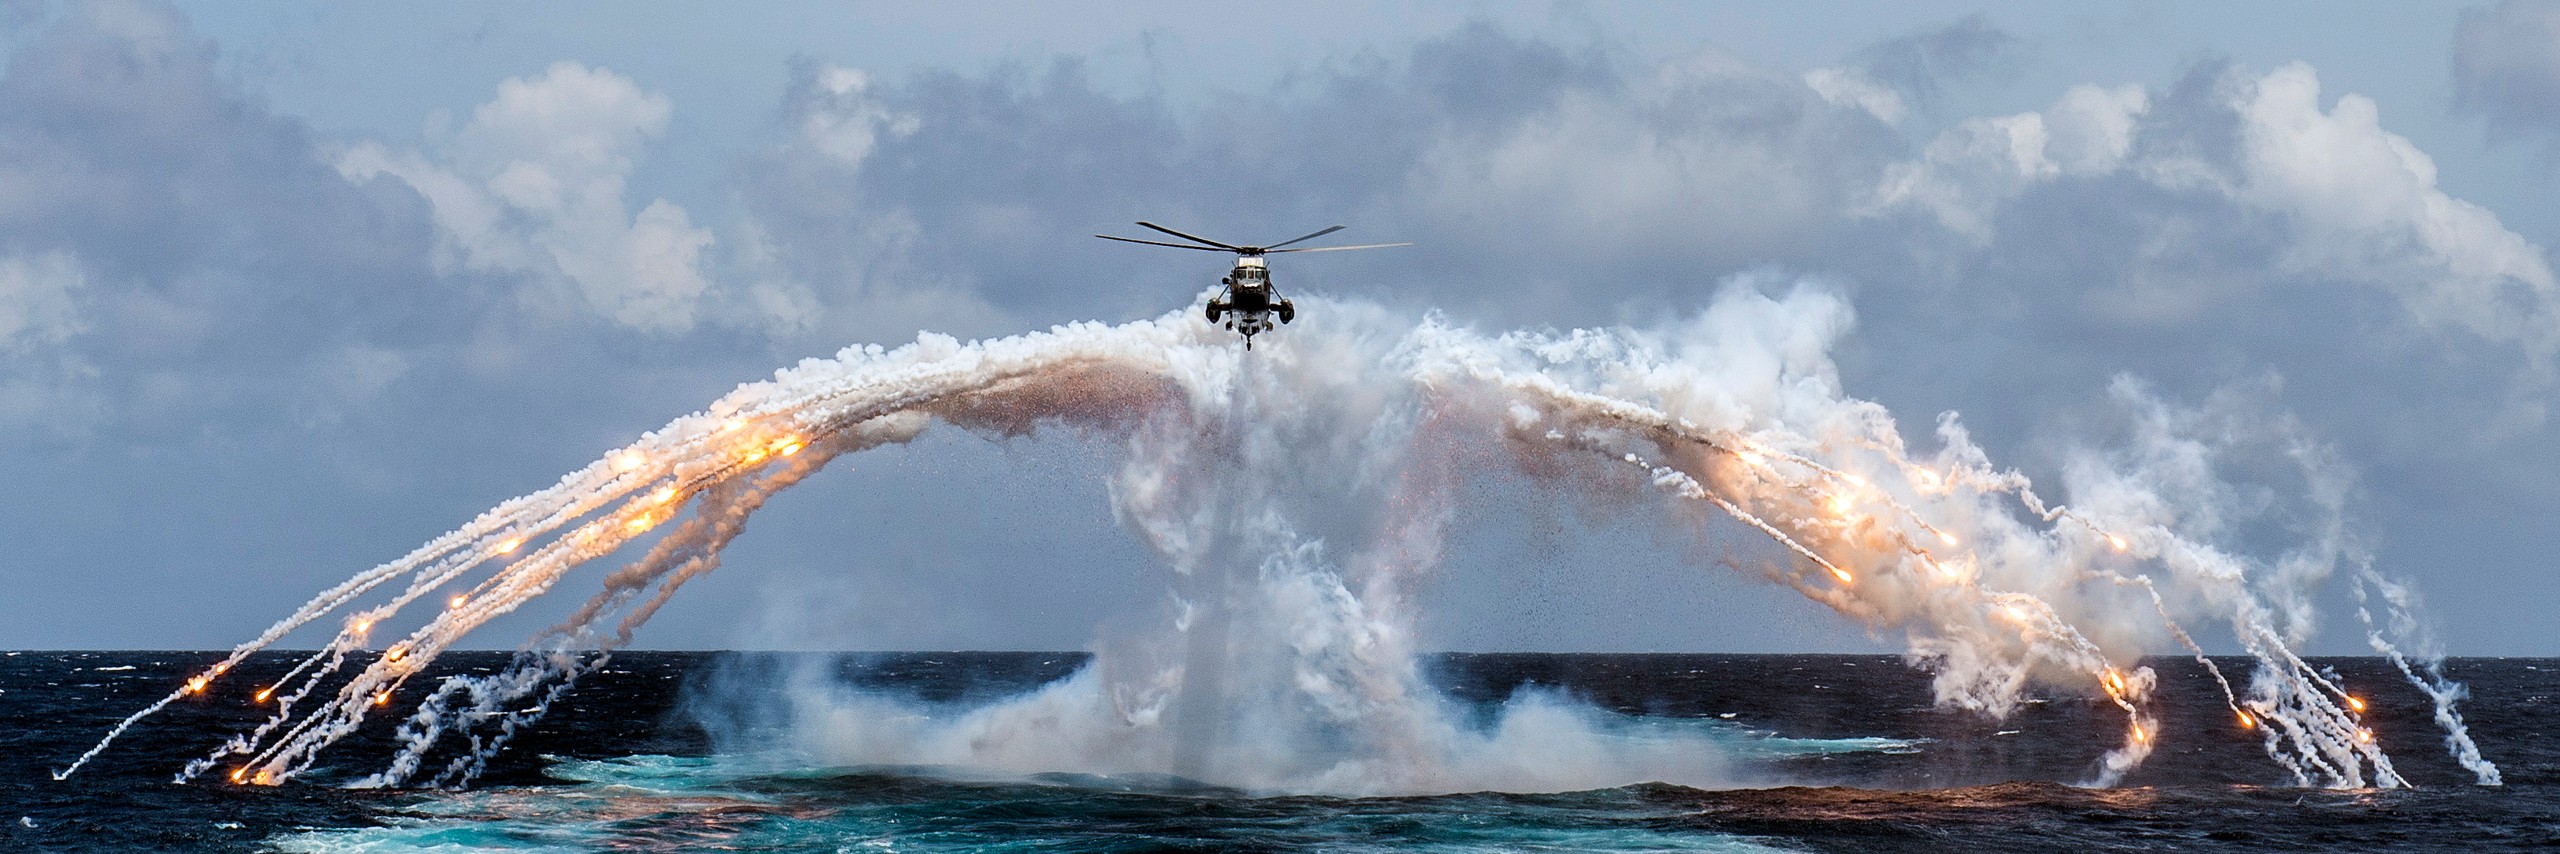 Sikorsky CH-124 Sea King #19